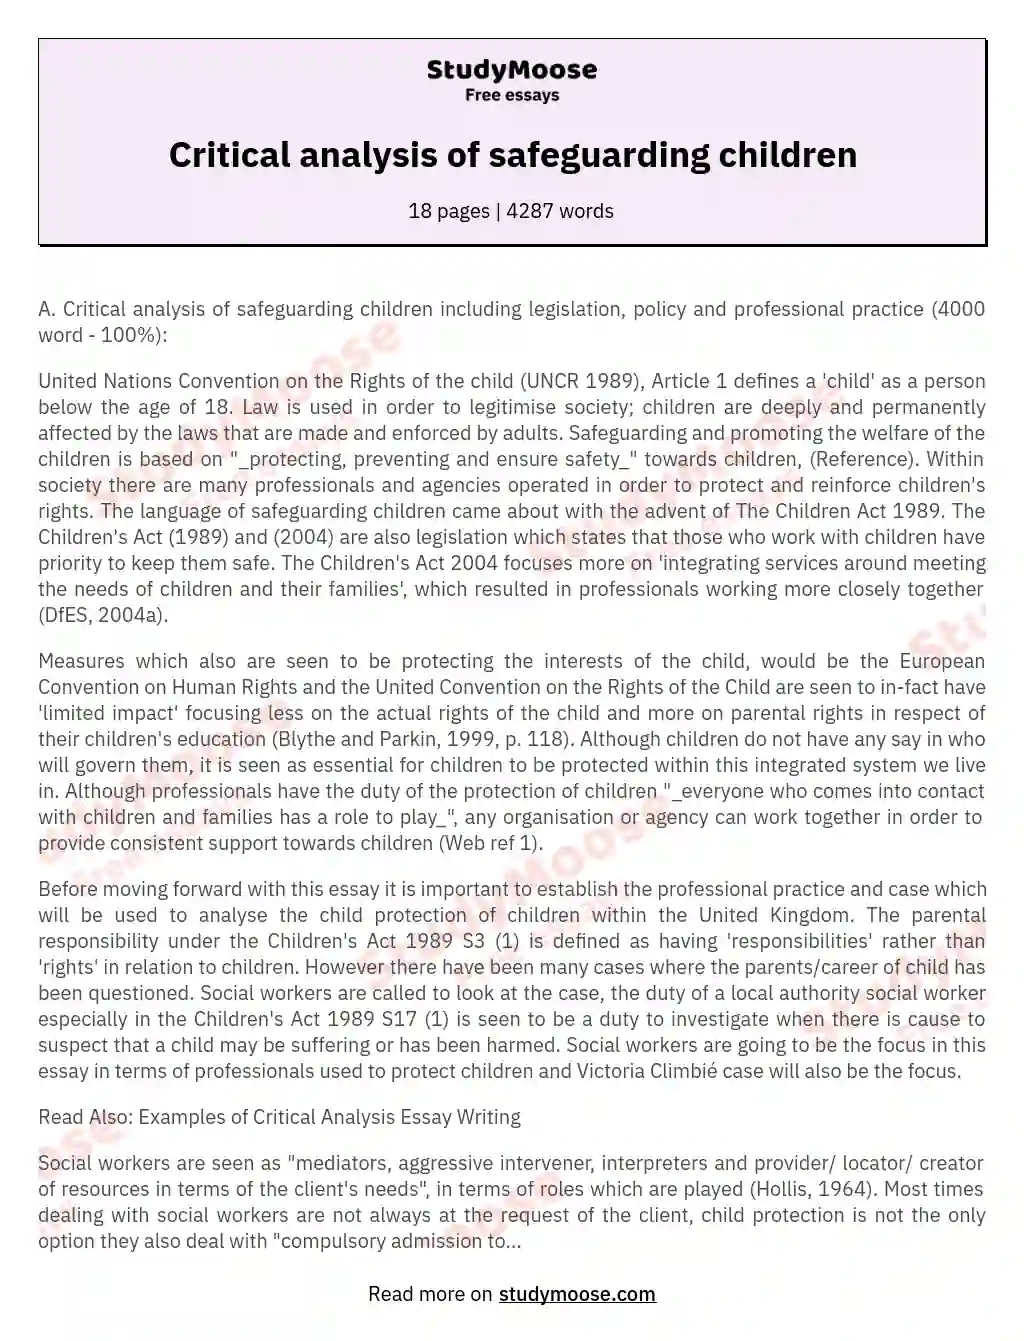 Critical analysis of safeguarding children essay